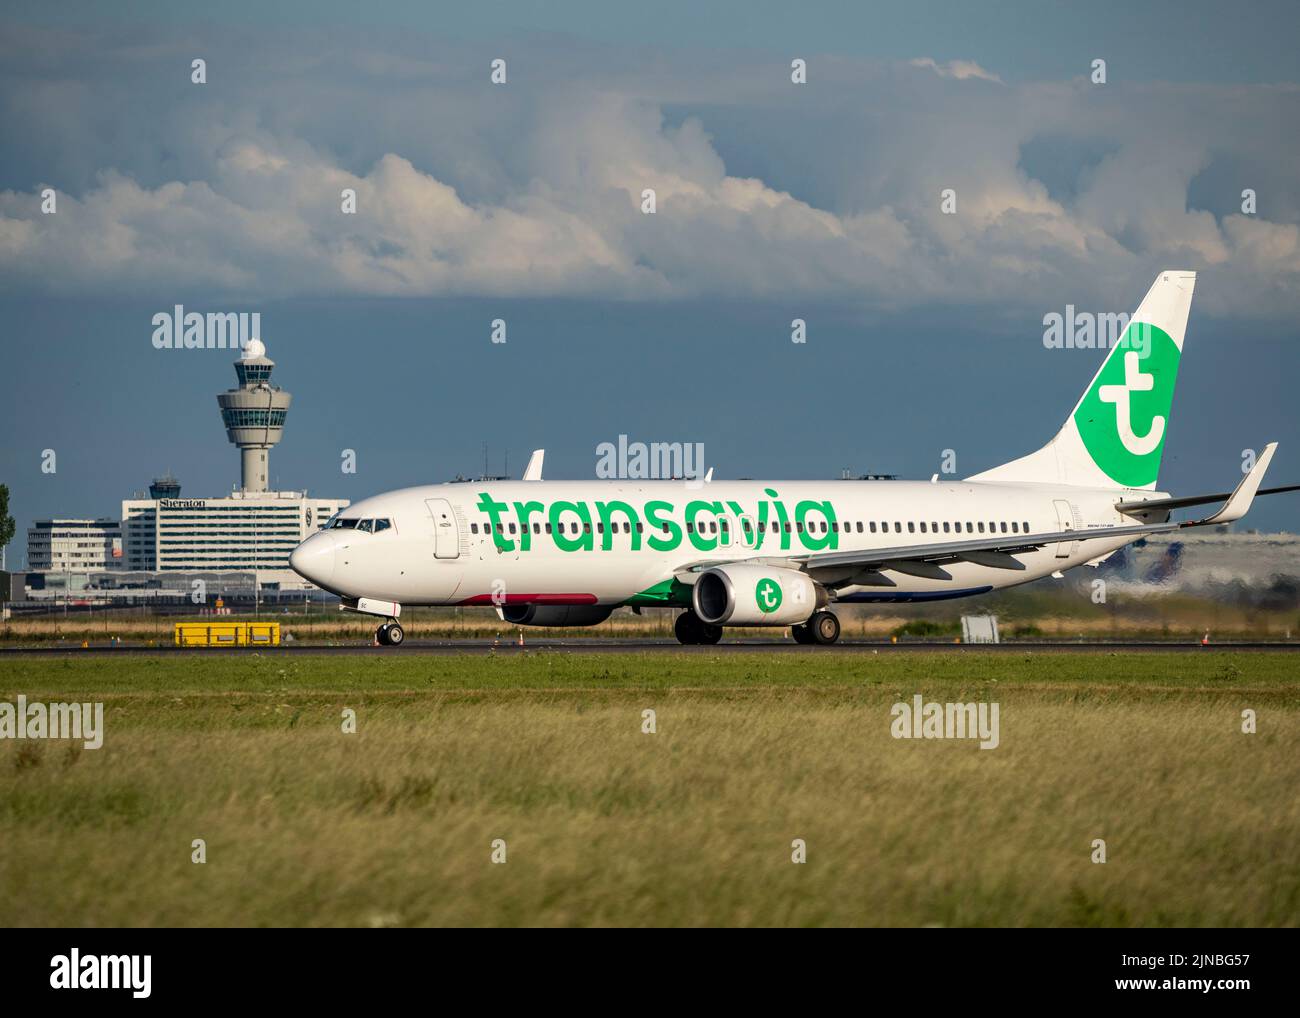 Amsterdam Shiphol Airport, Polderbaan, one of 6 runways, Transavia aircraft, Stock Photo